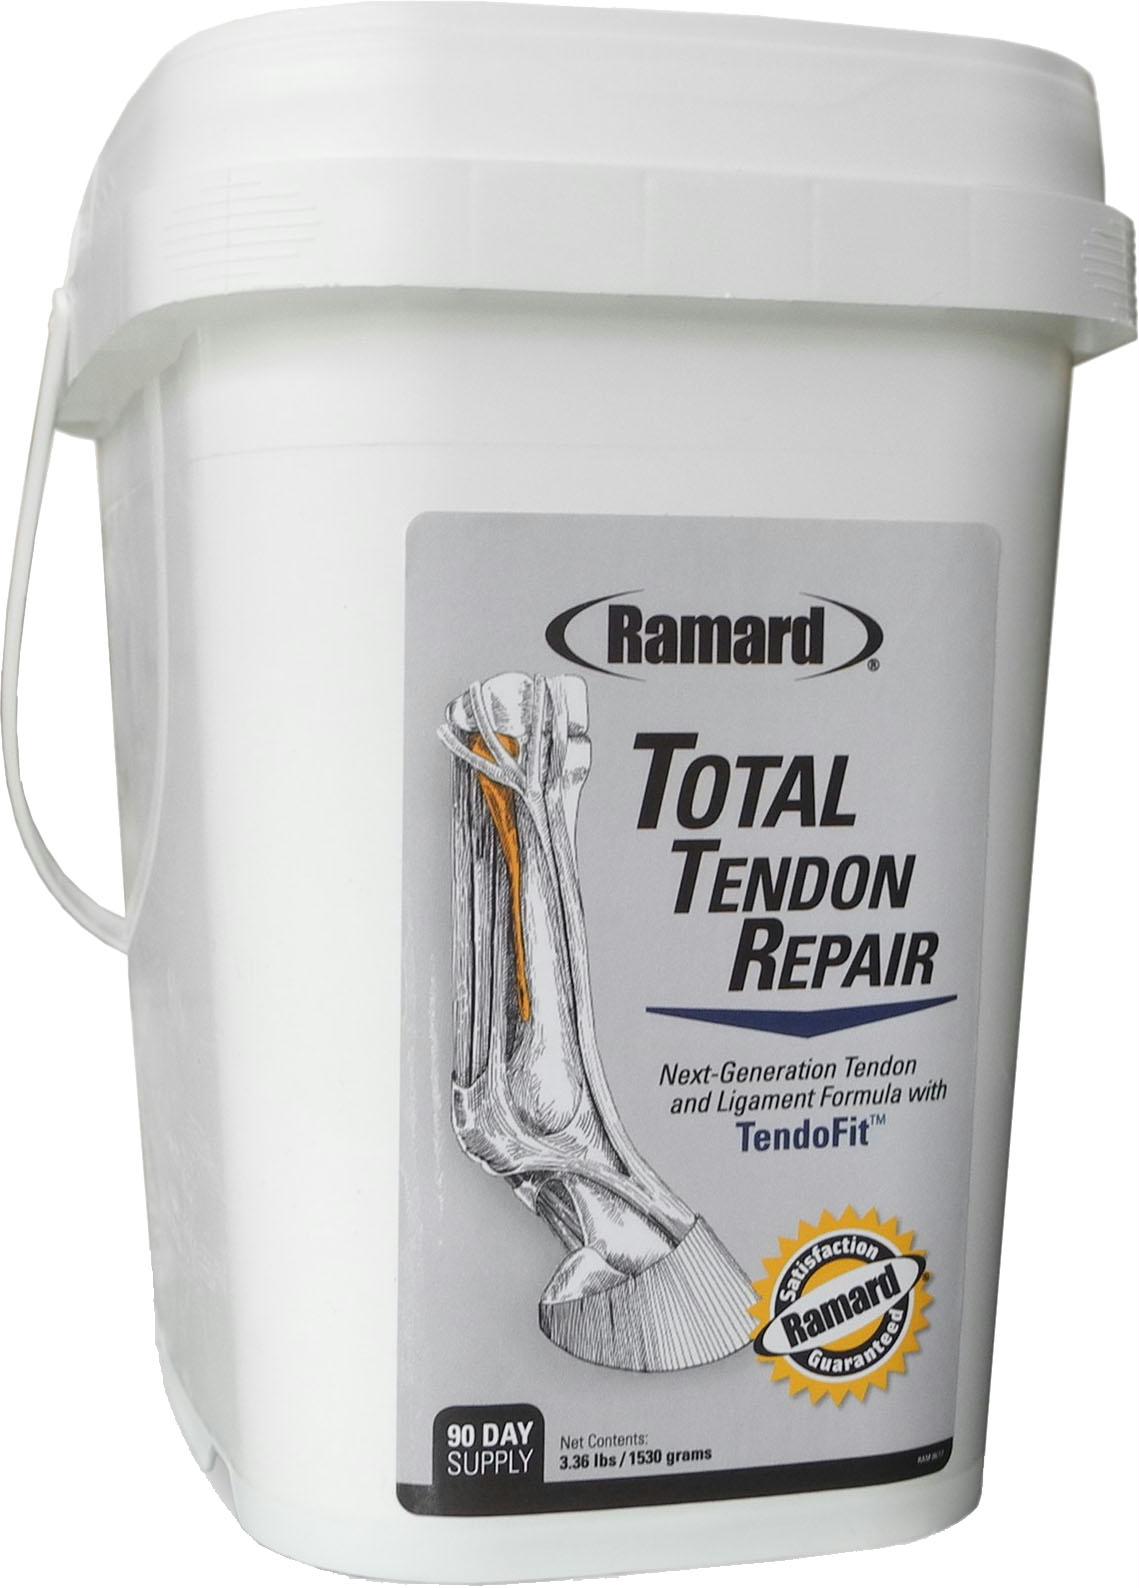 Total Tendon Repair Pail - aomega-products